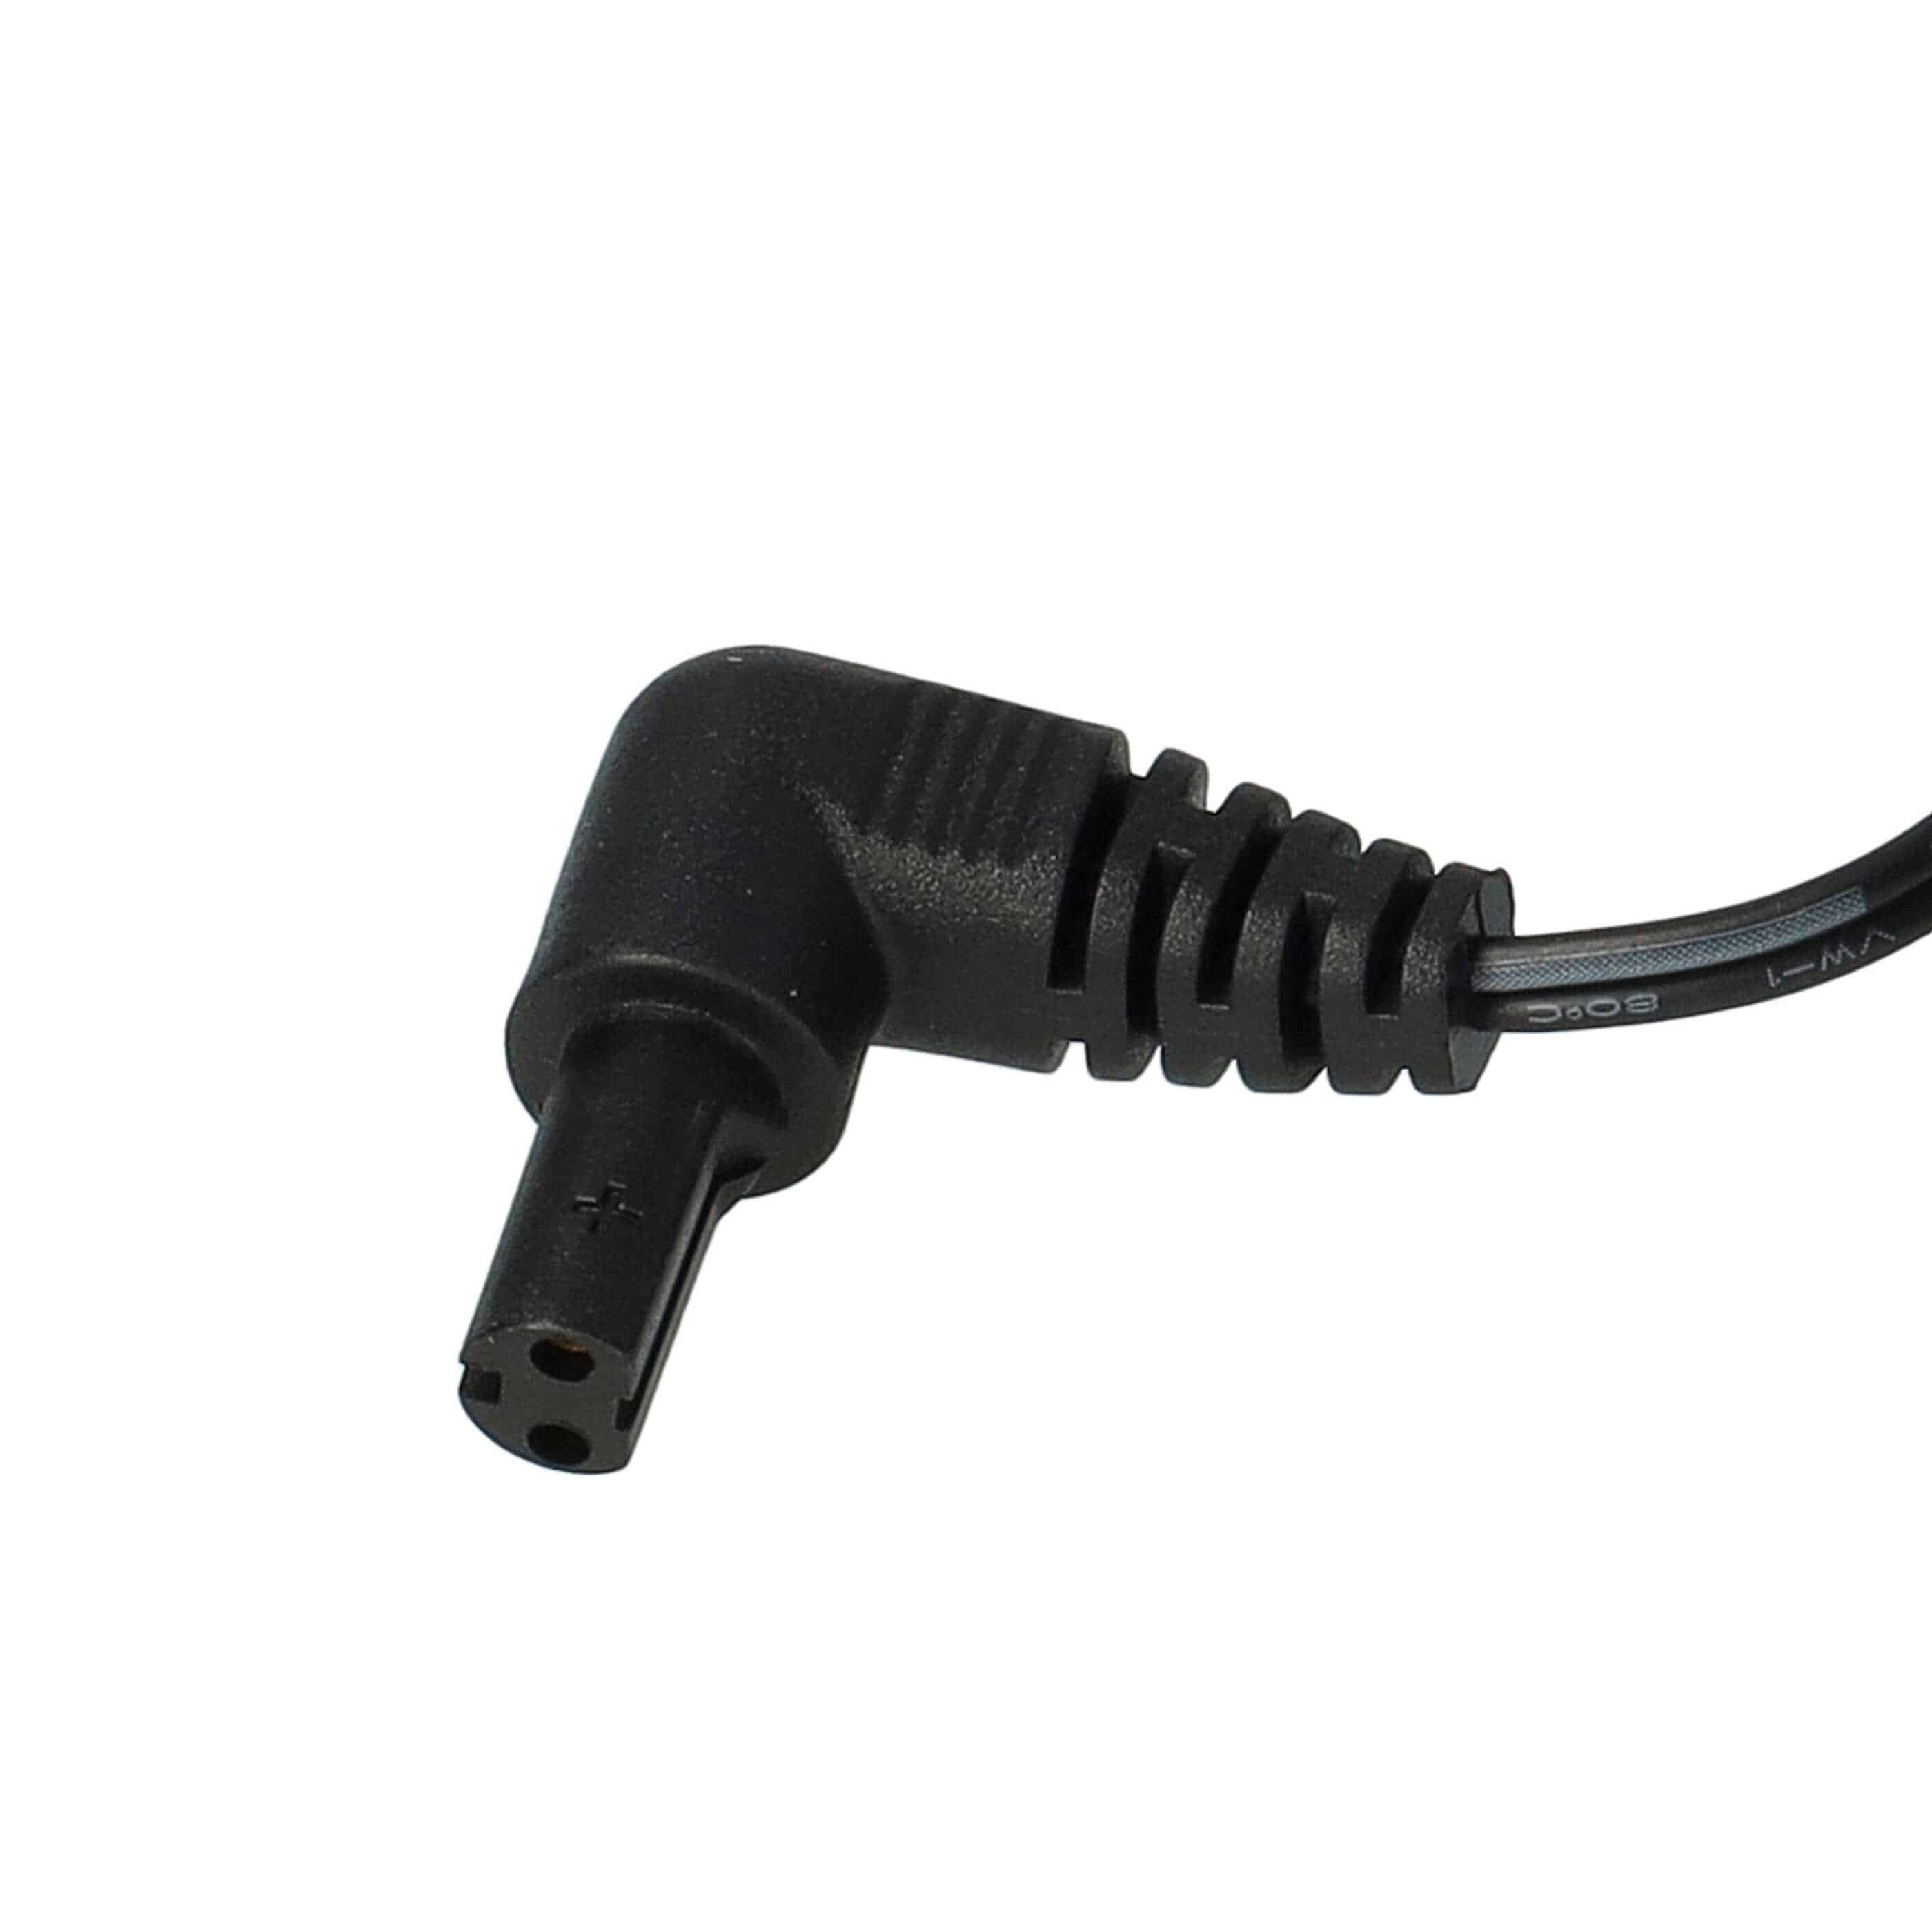 Mains Power Adapter replaces Black & Decker 90545059-01 for Black & Decker Power Tool - 200 cm